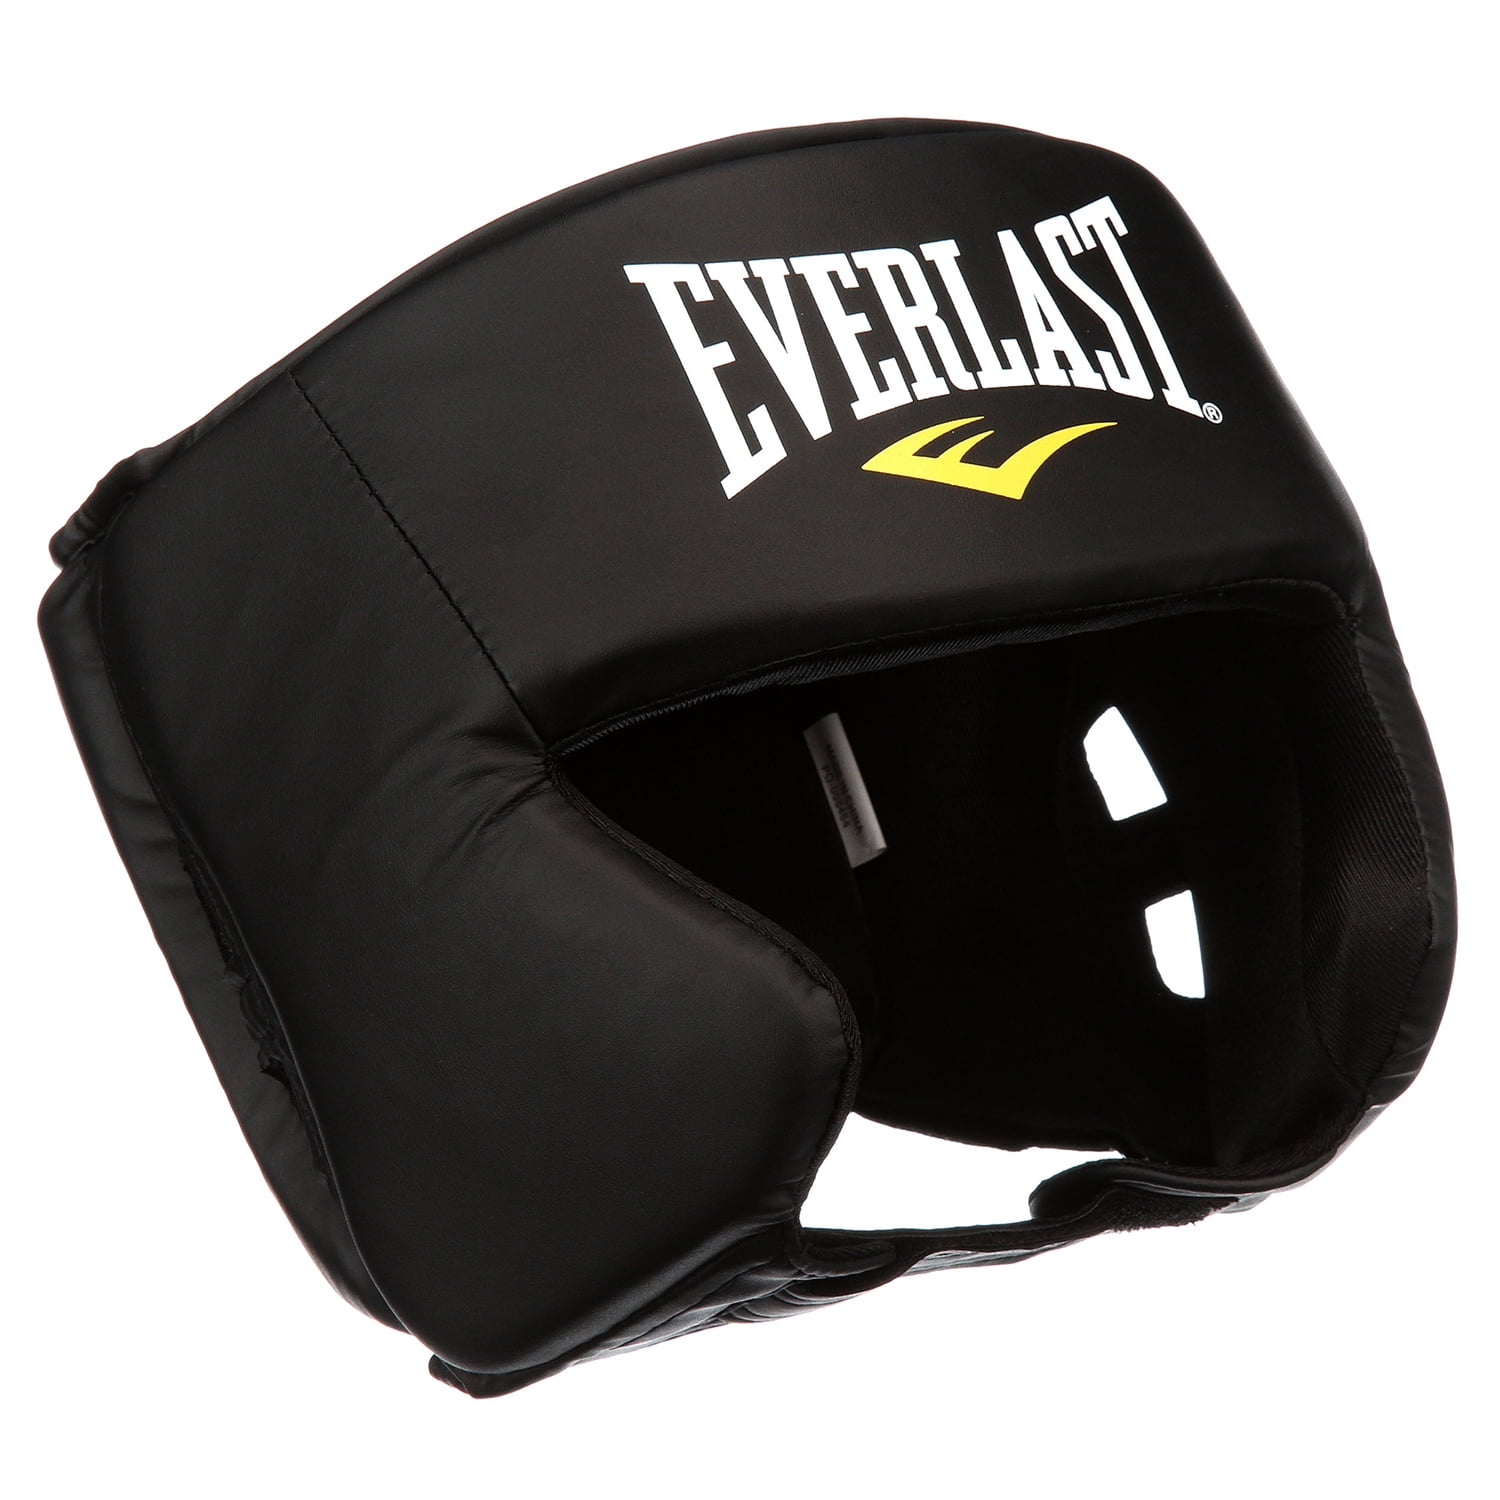 Everlast Model 4022 Everfresh Level Ii Boxing Head Gear NEW in Bag 